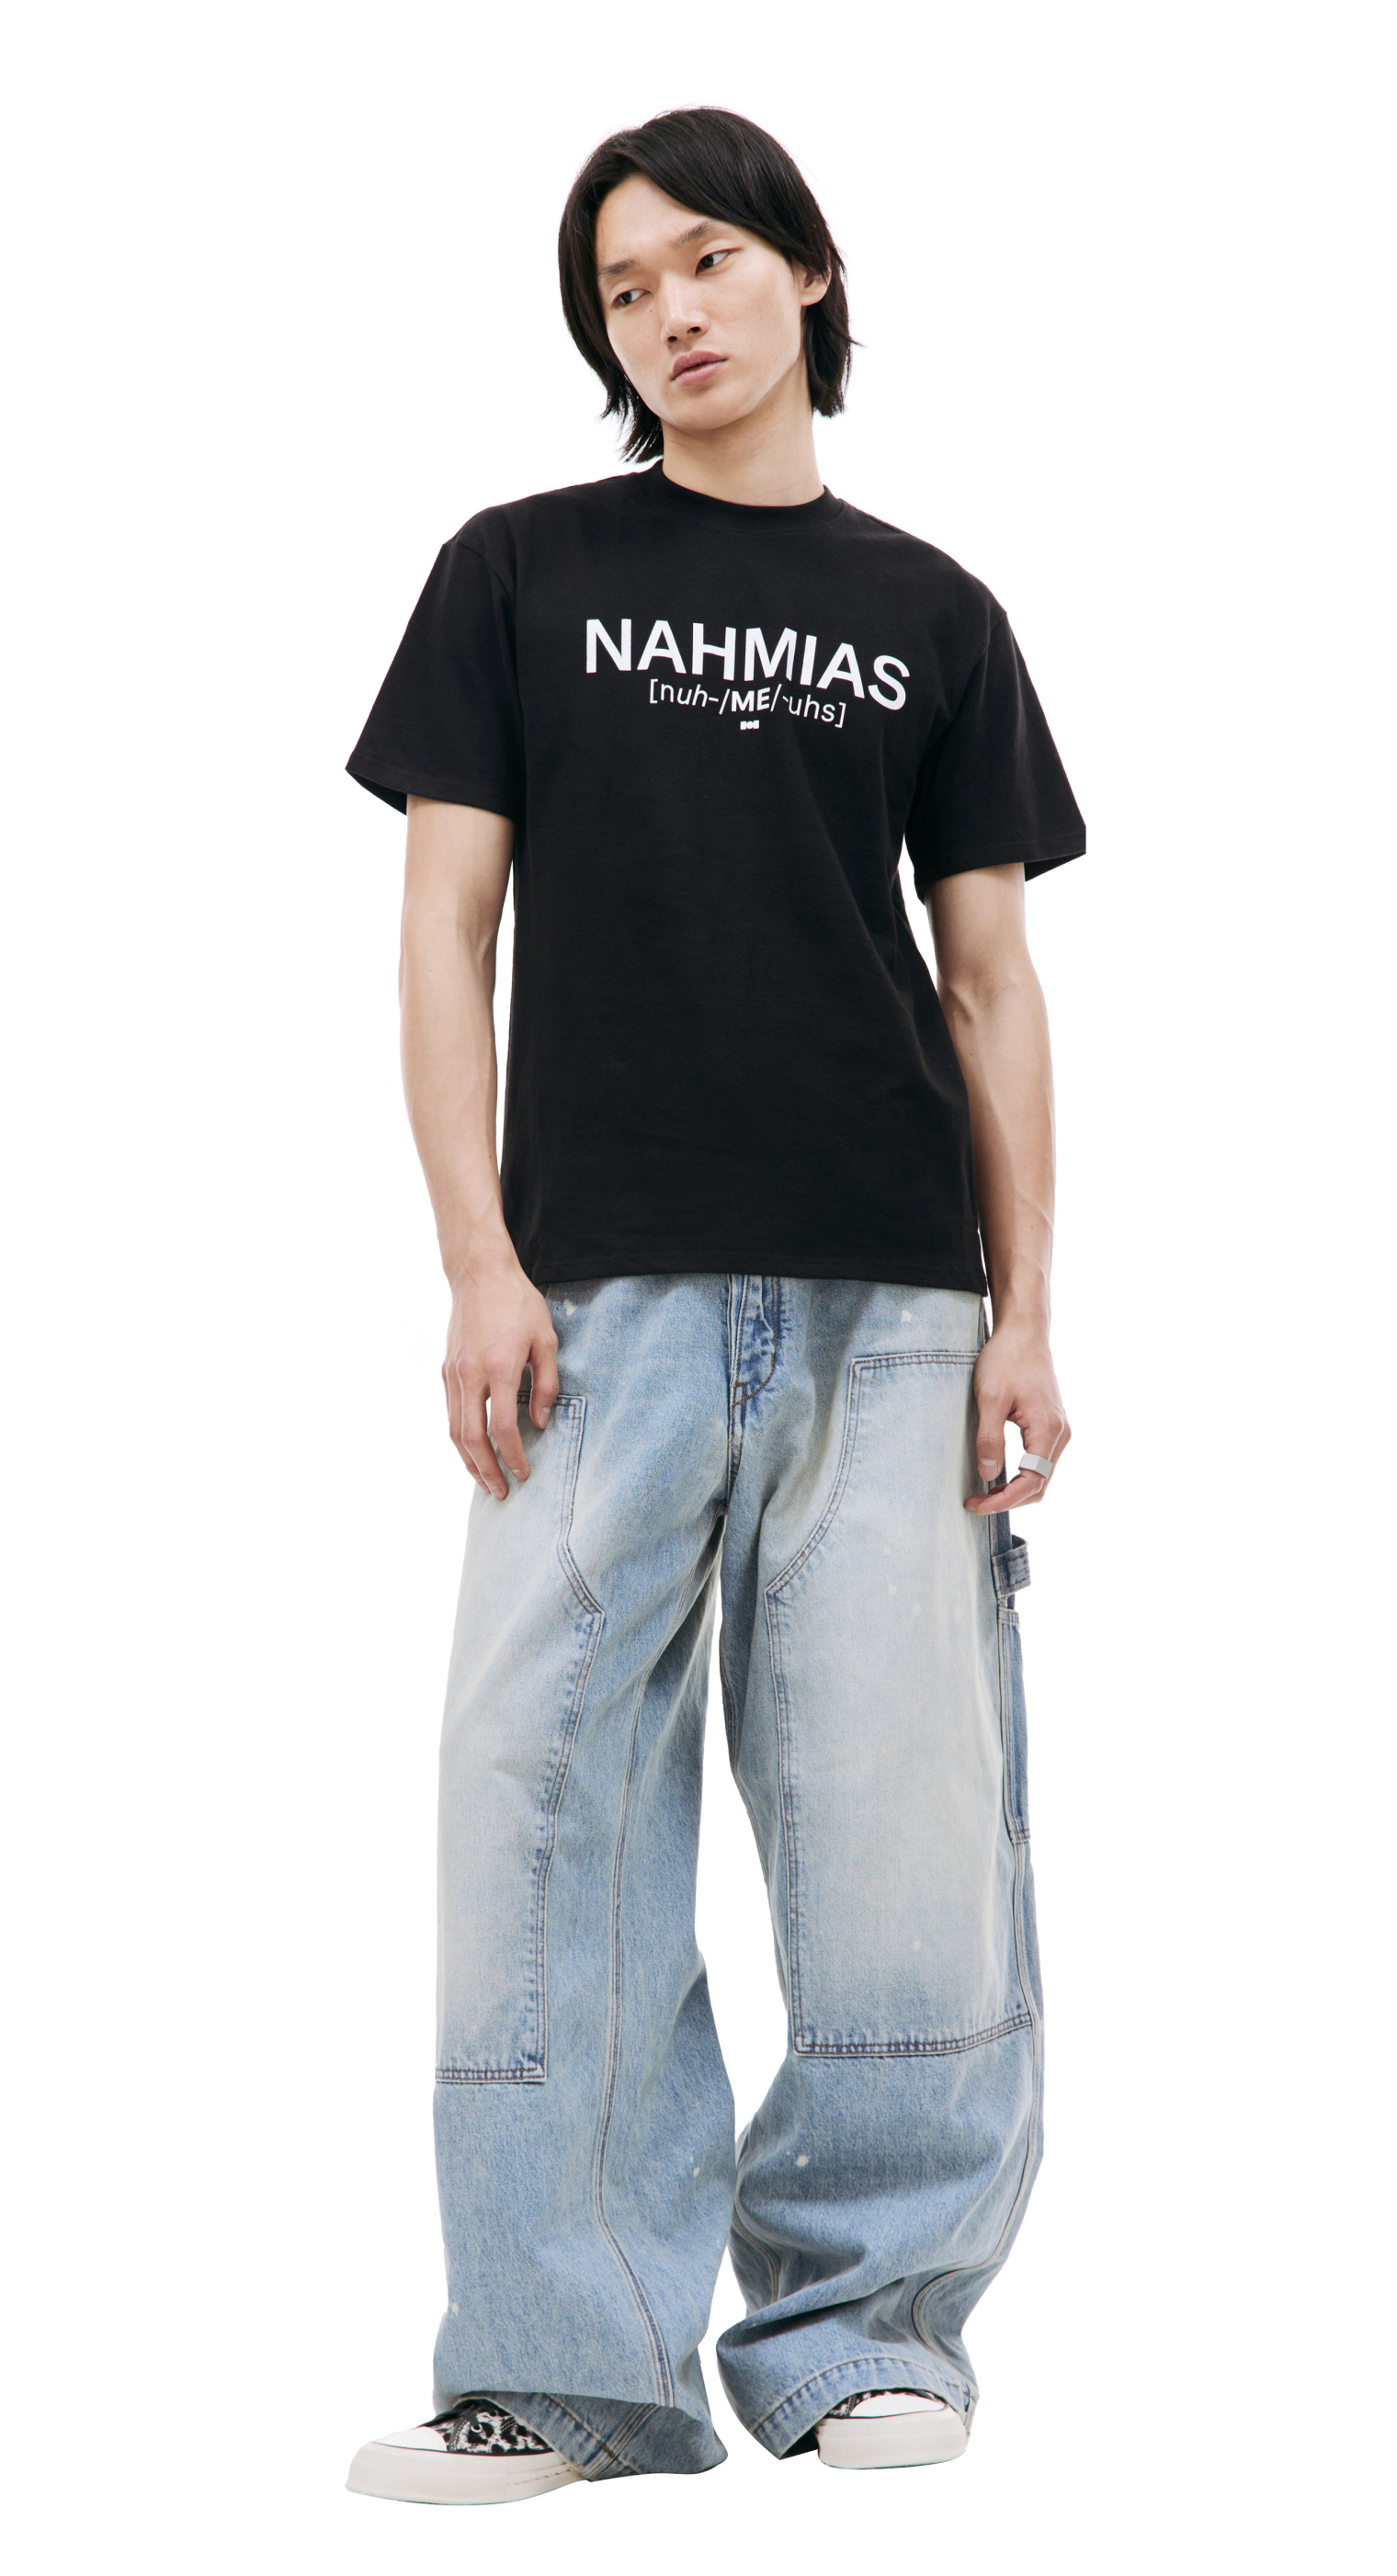 Nahmias T-shirt